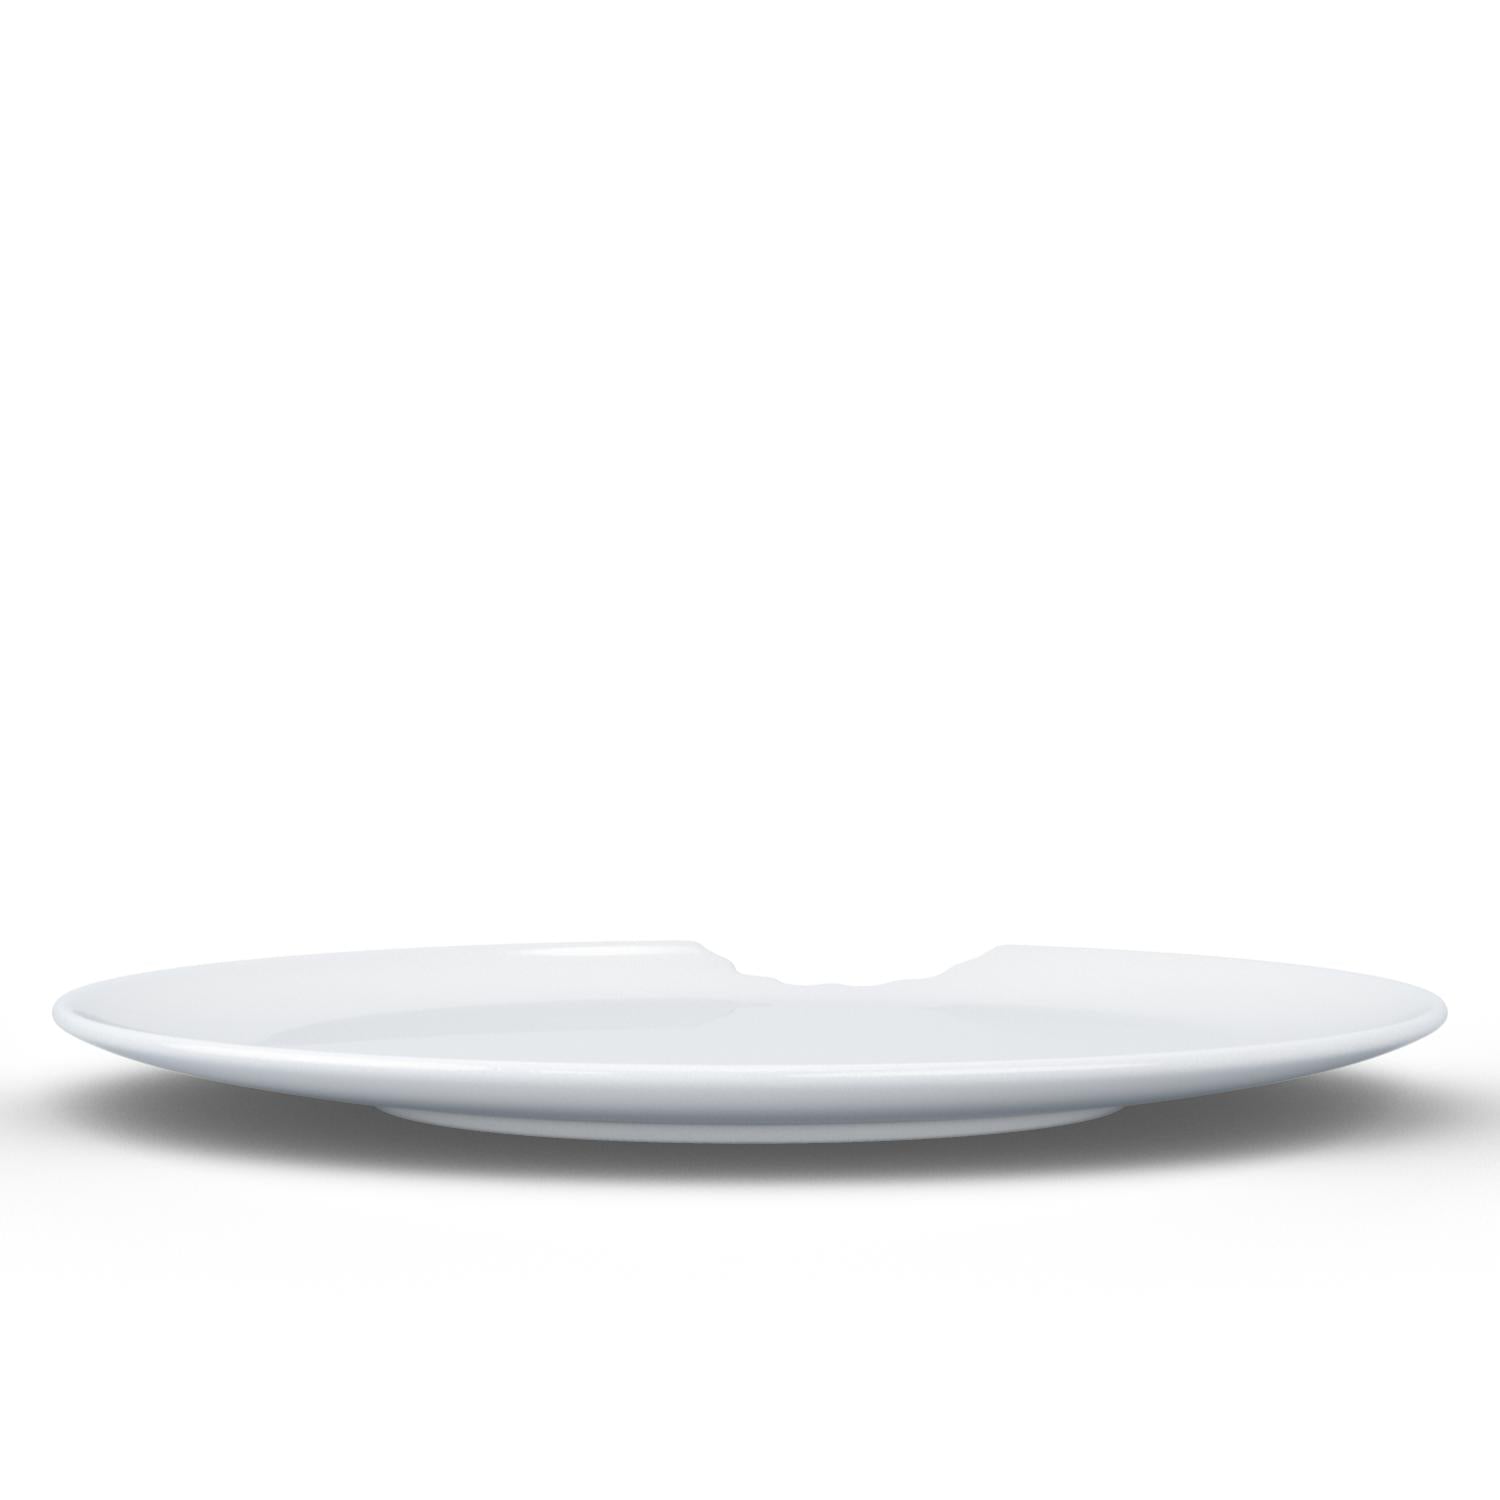 TASSEN Porcelain Dessert Plates w. Bite Mark, 7.8 Inch, White(Set